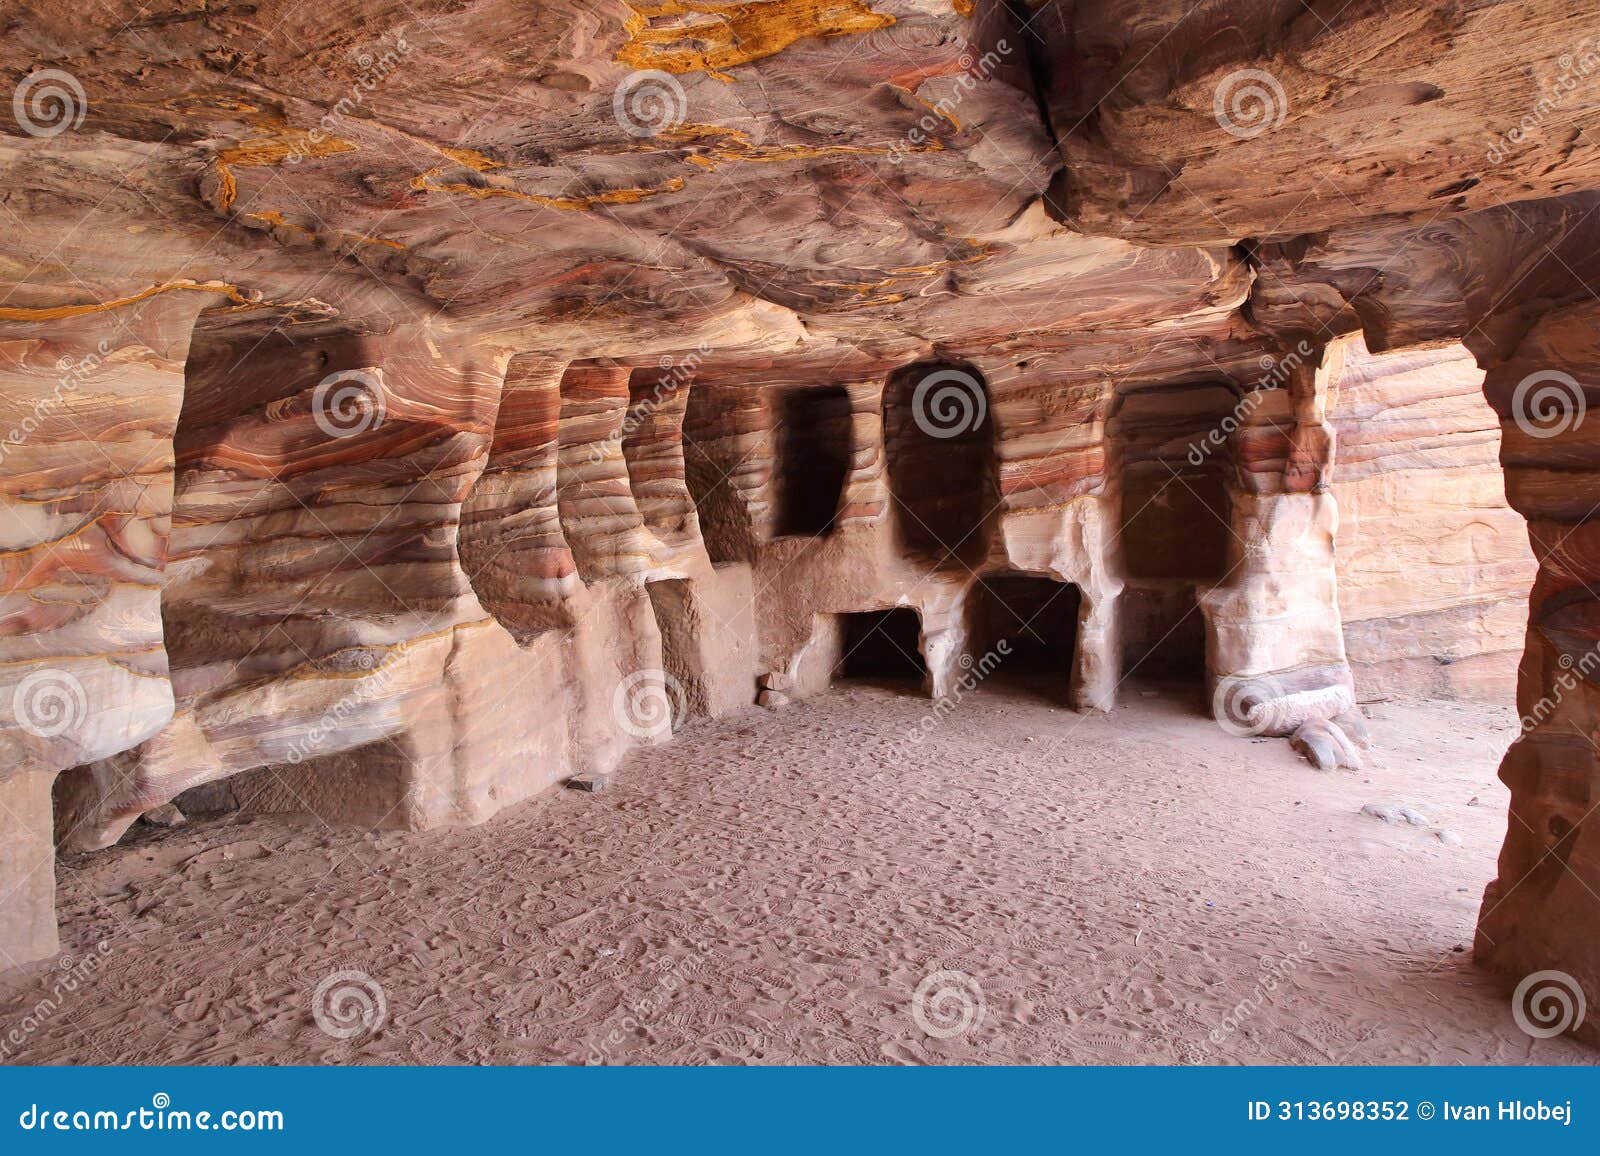 nabataean rock city of petra, dwelling interior, jordan